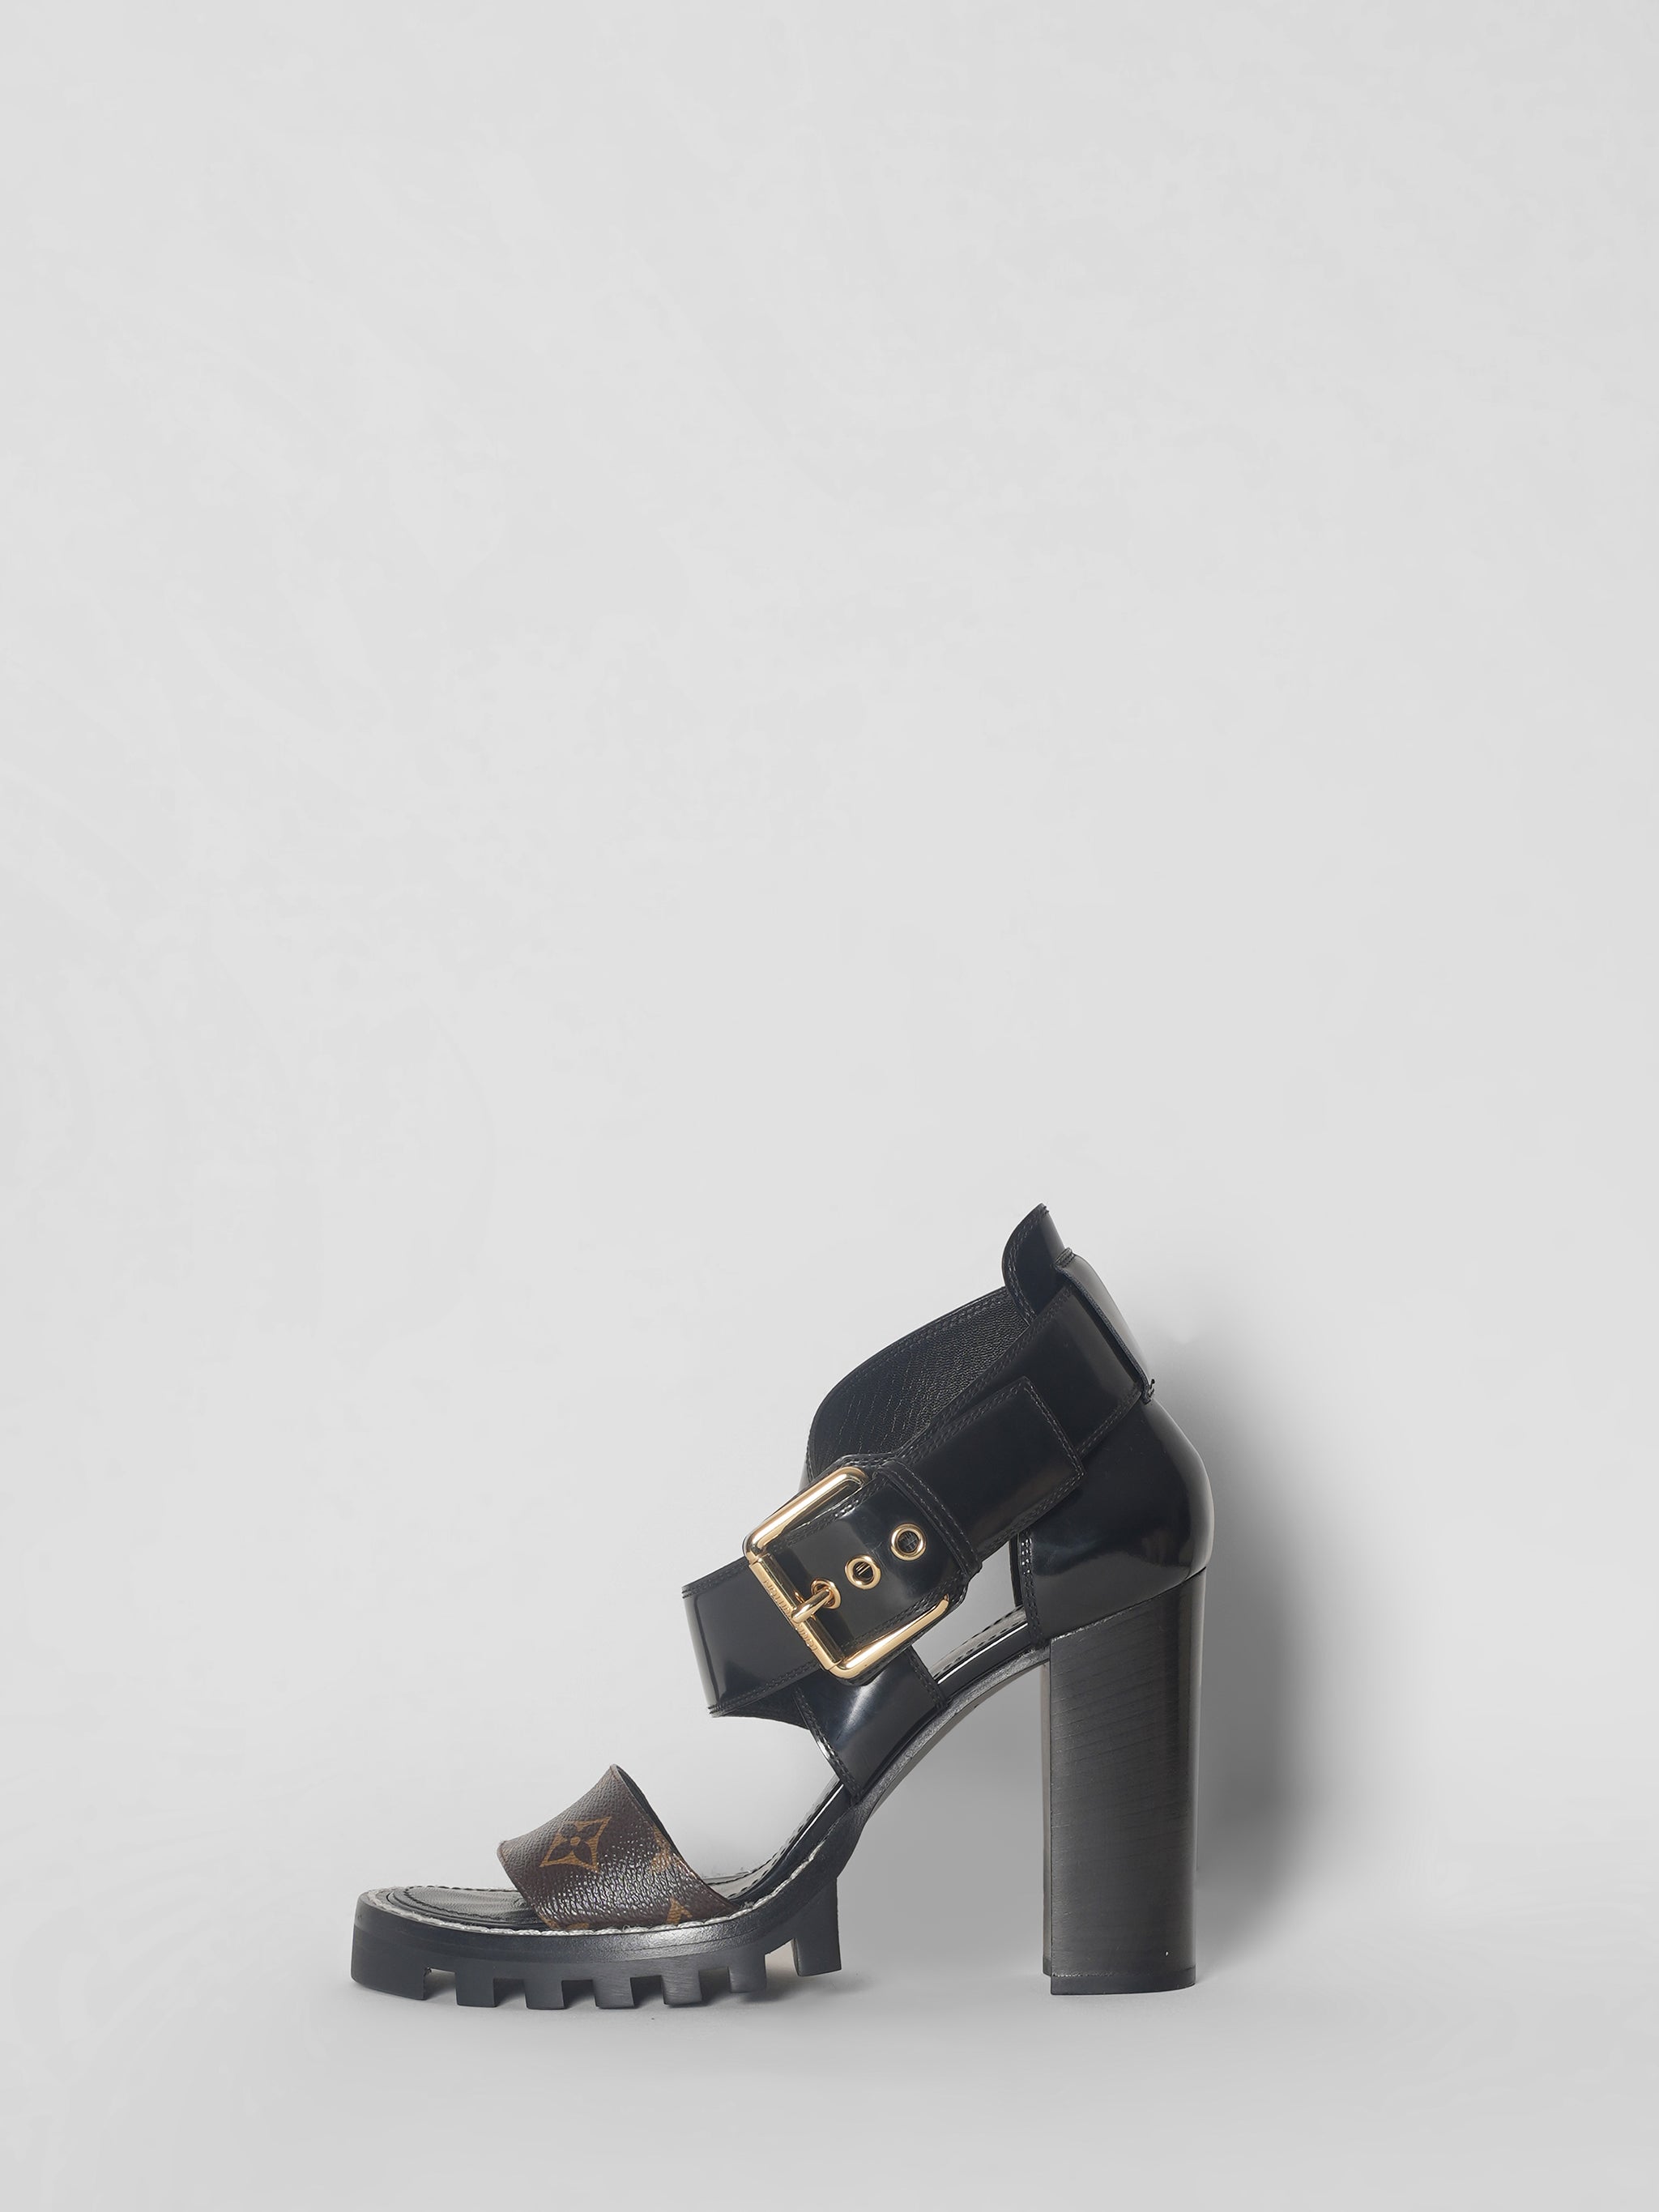 New Louis Vuitton Monogram Patent Leather Cross Strap Sandals